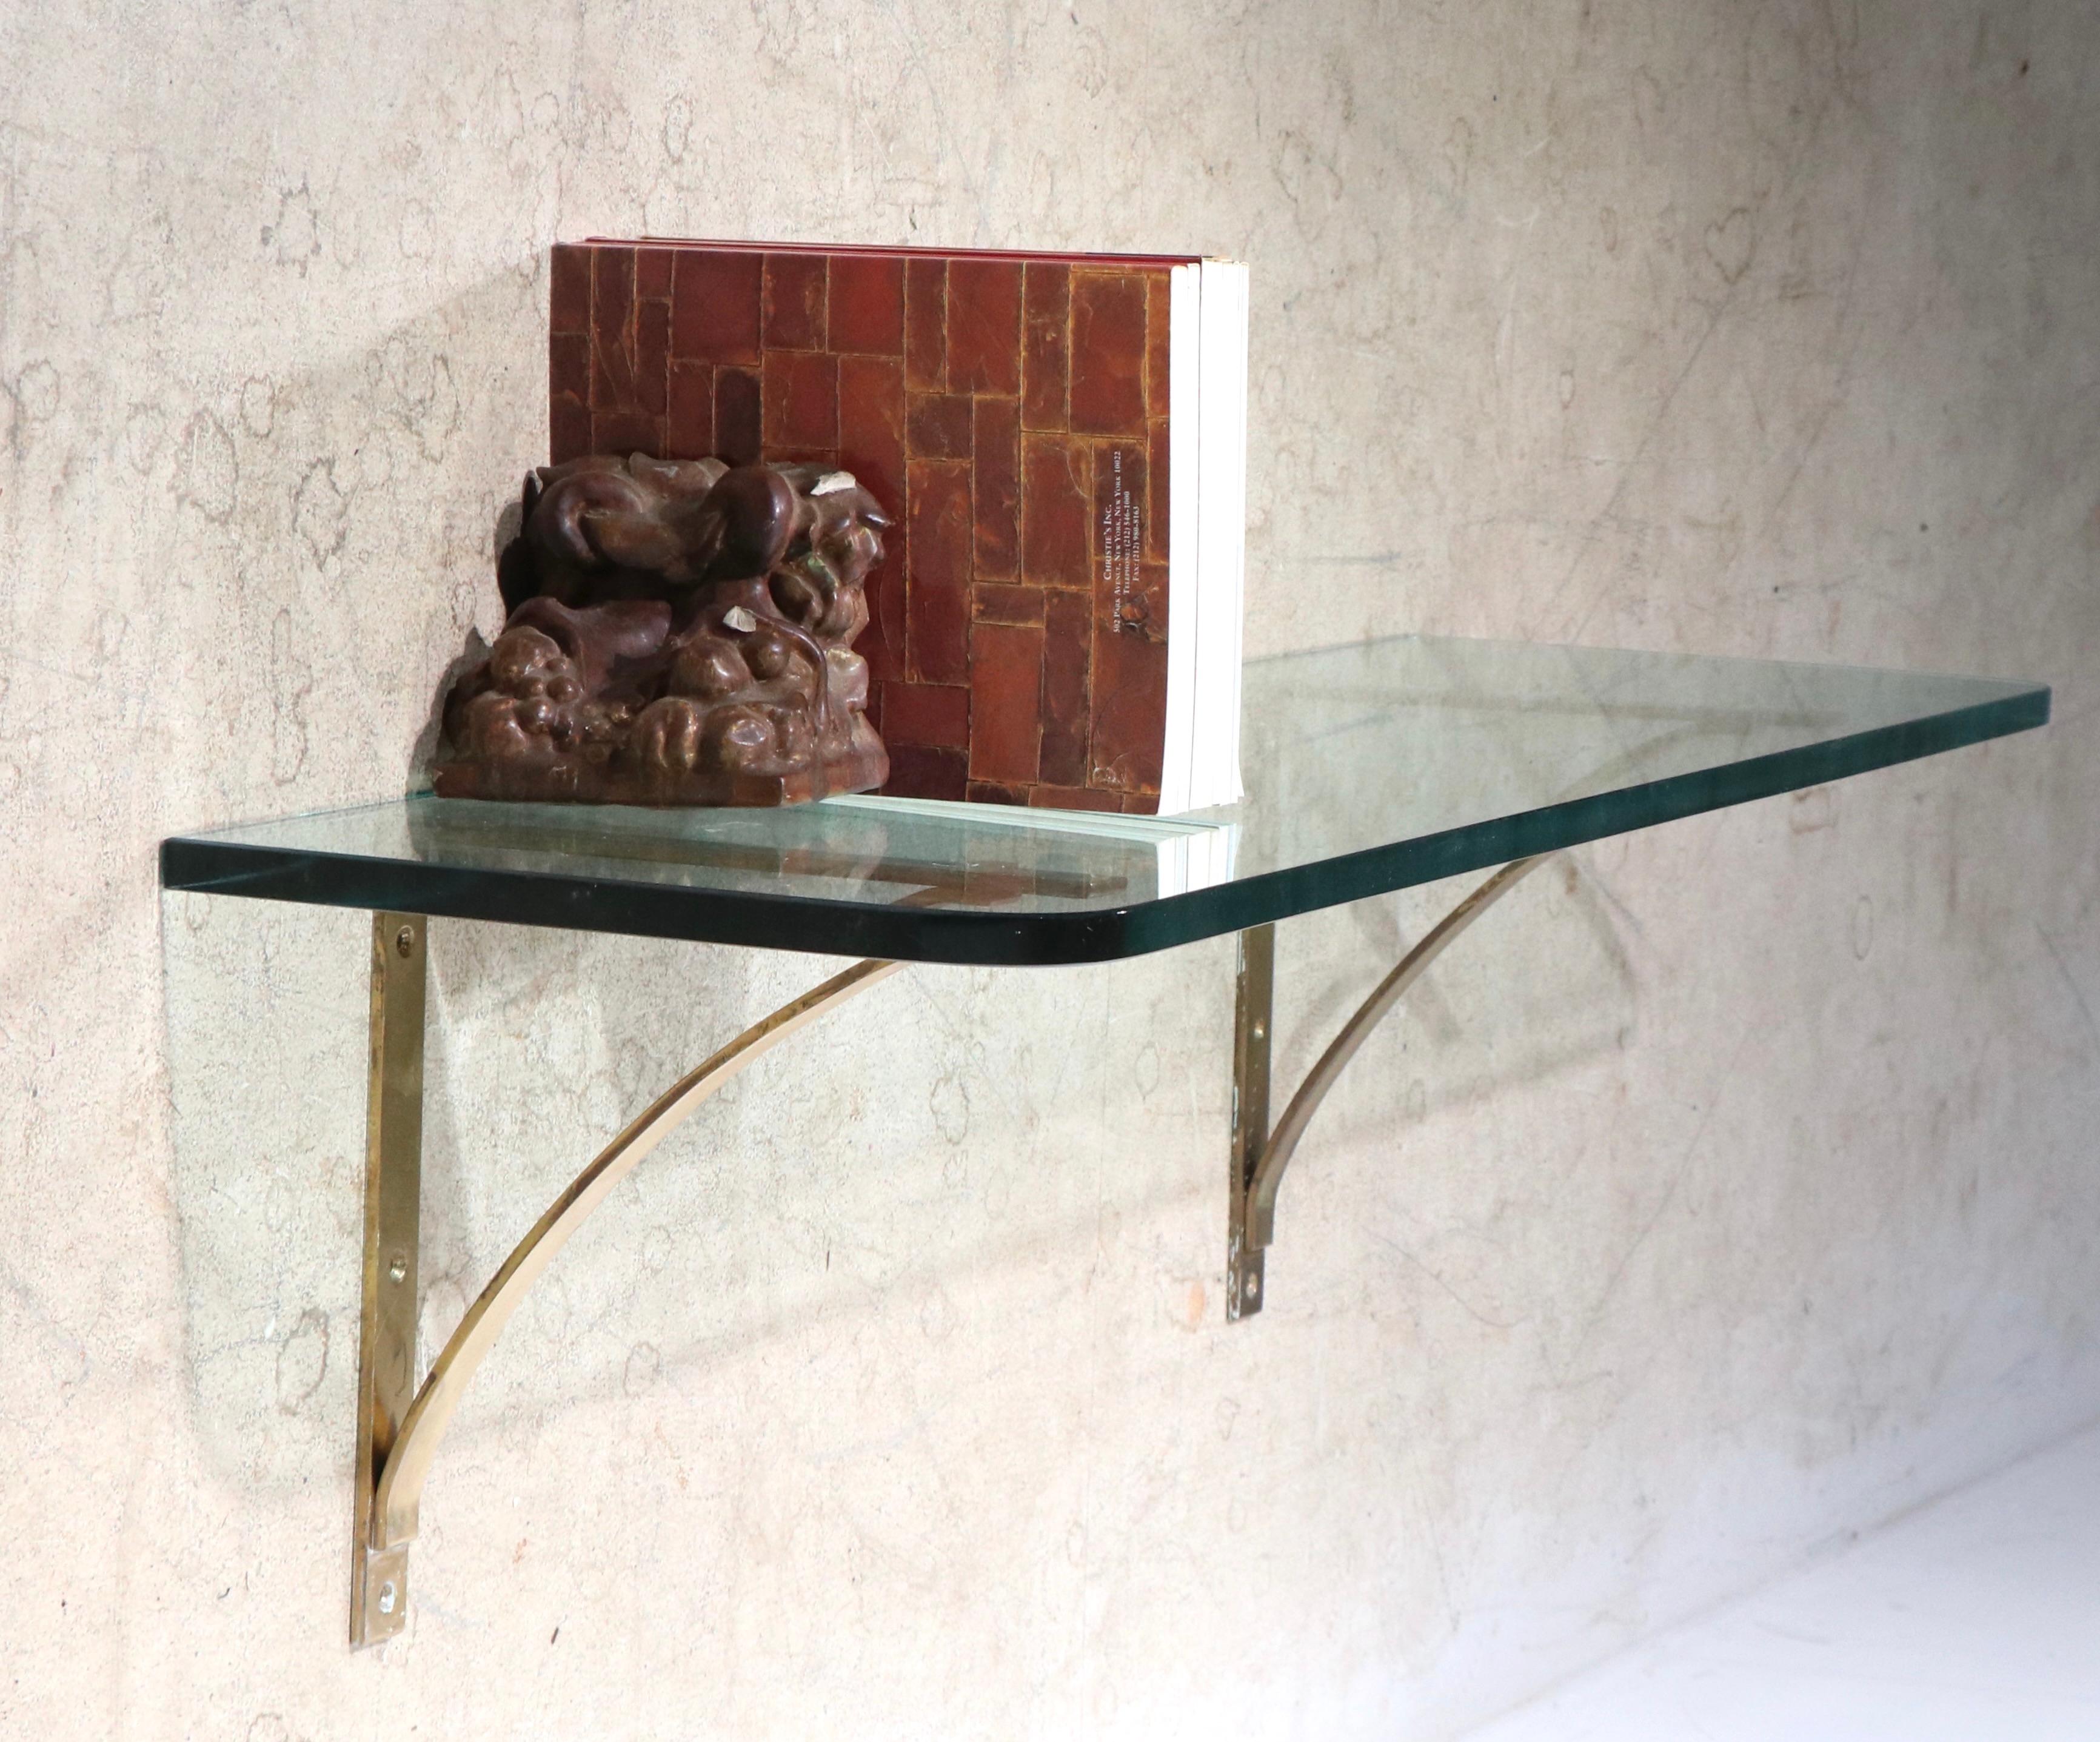 Wall mount plate glass shelf, having a thick ( 1